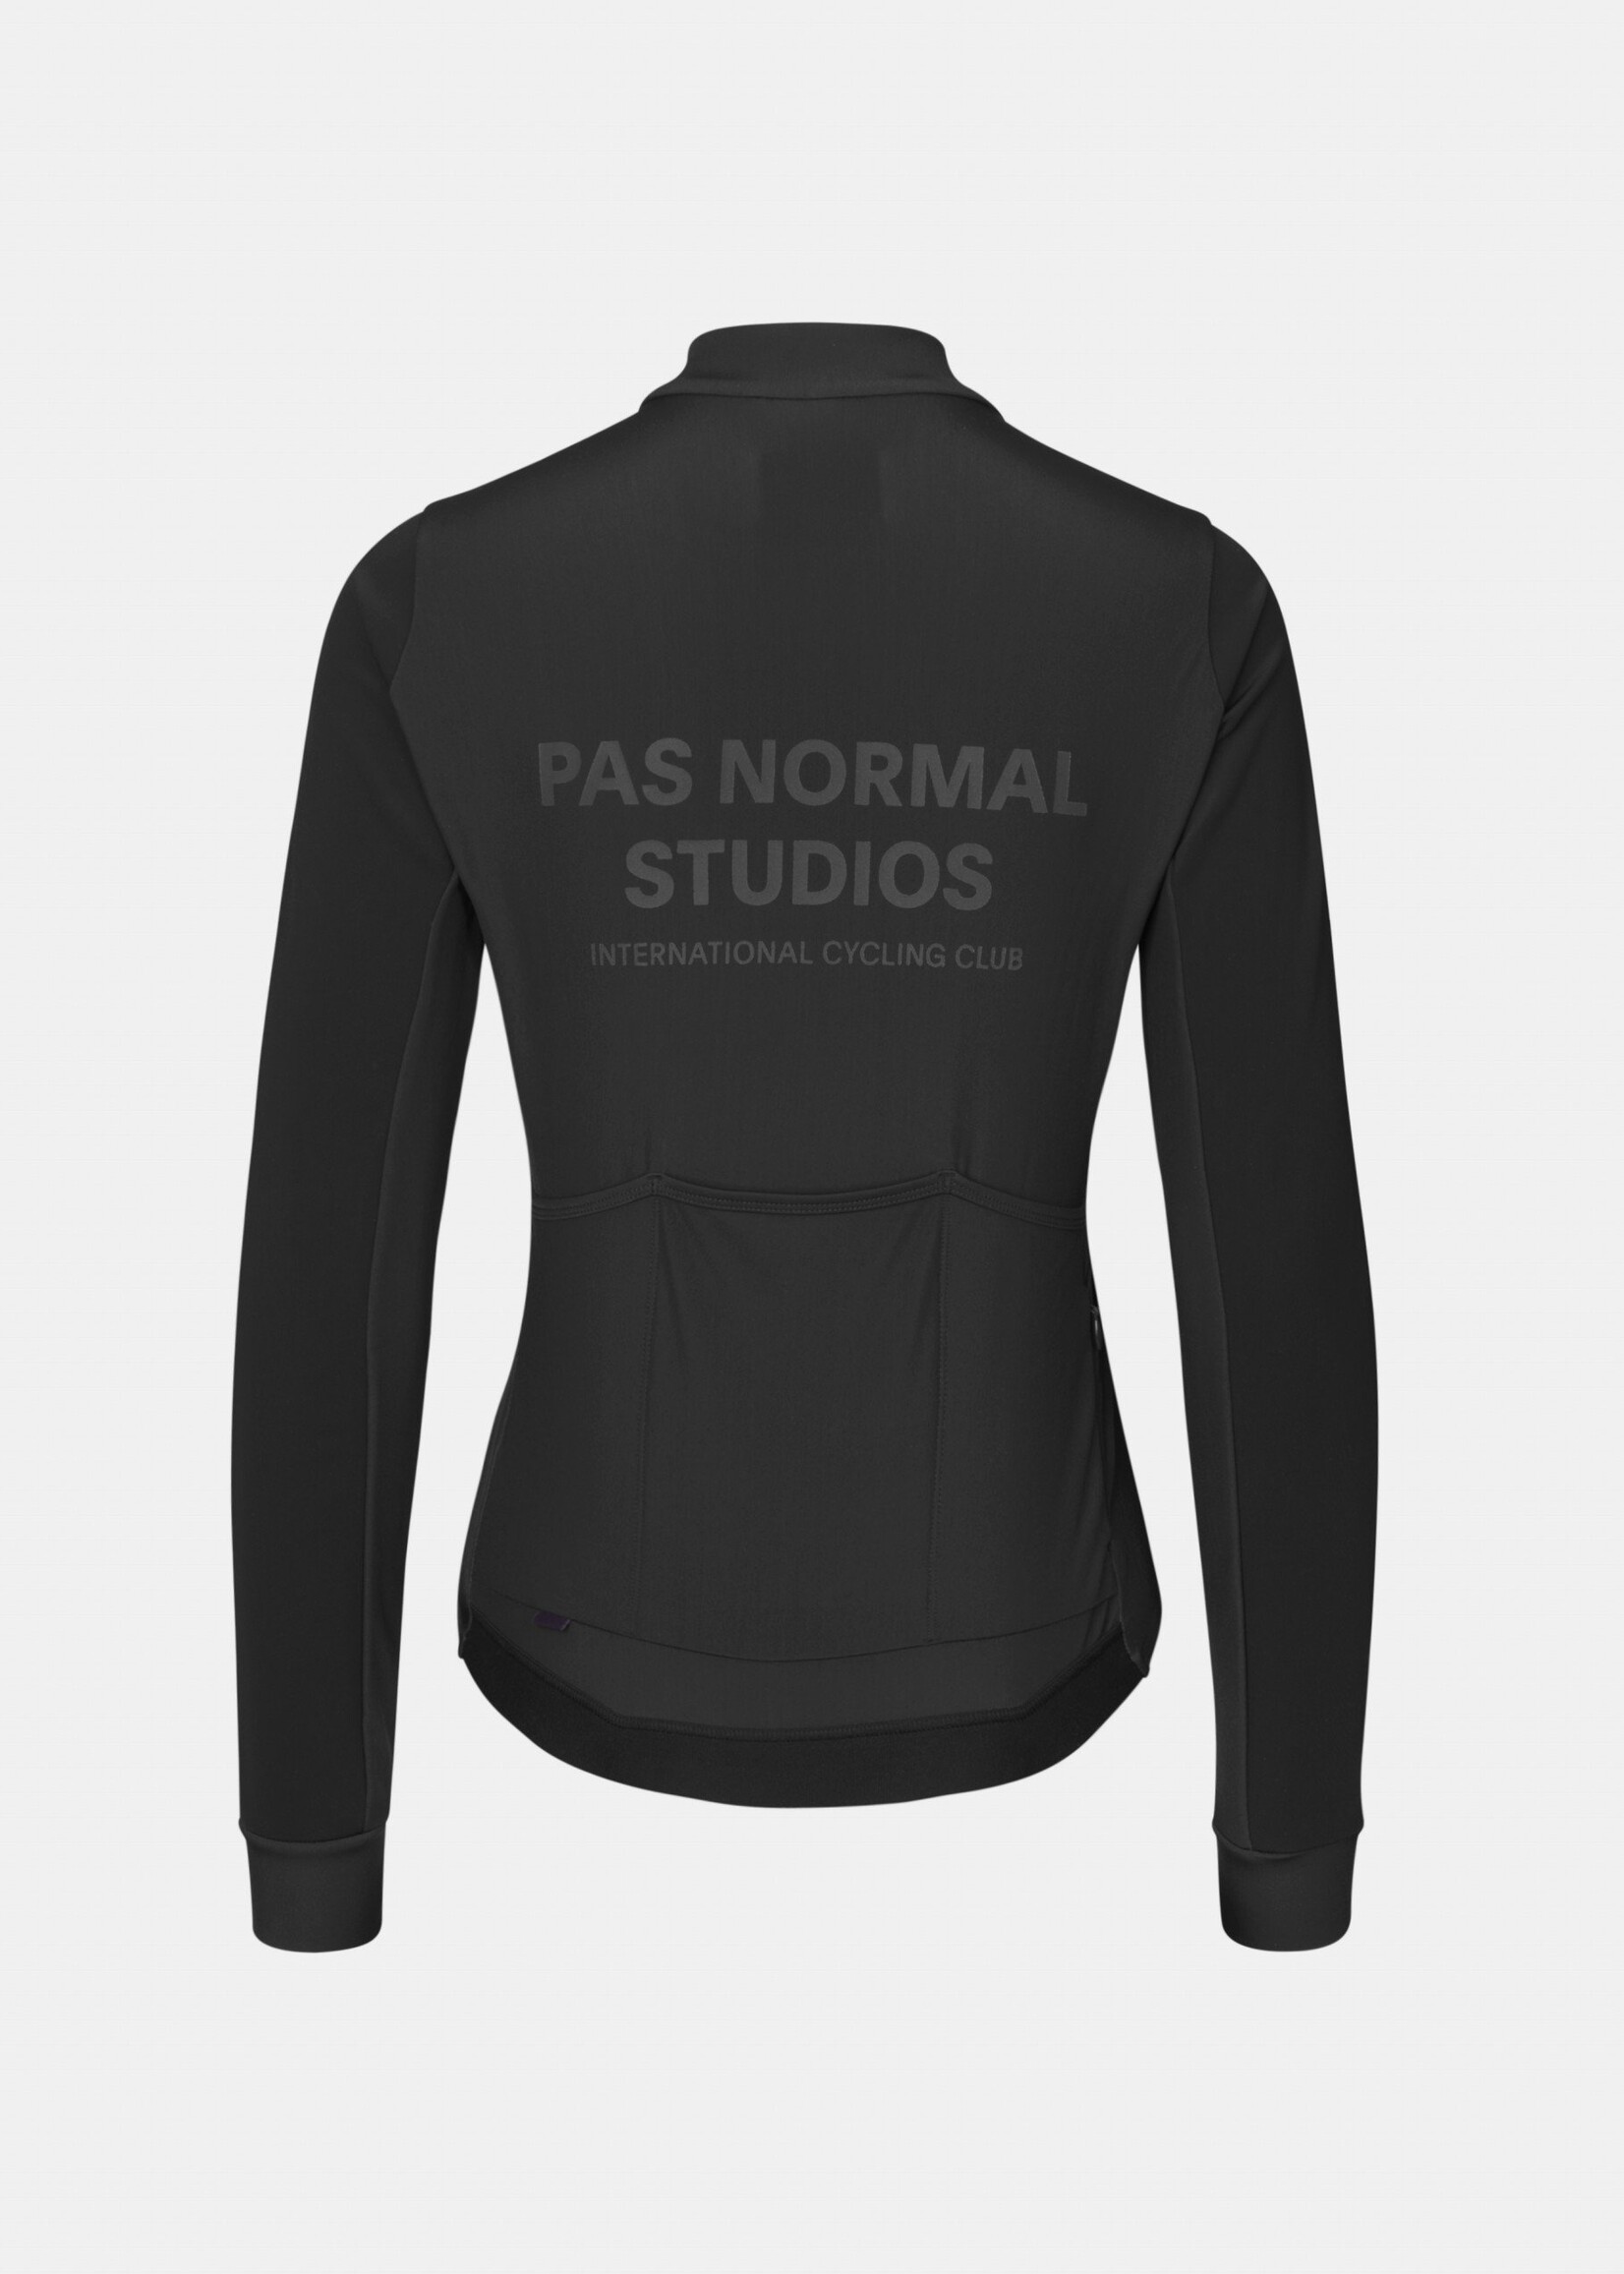 Pas Normal Studios Women's Mechanism Thermal Long Sleeve Jersey - Black